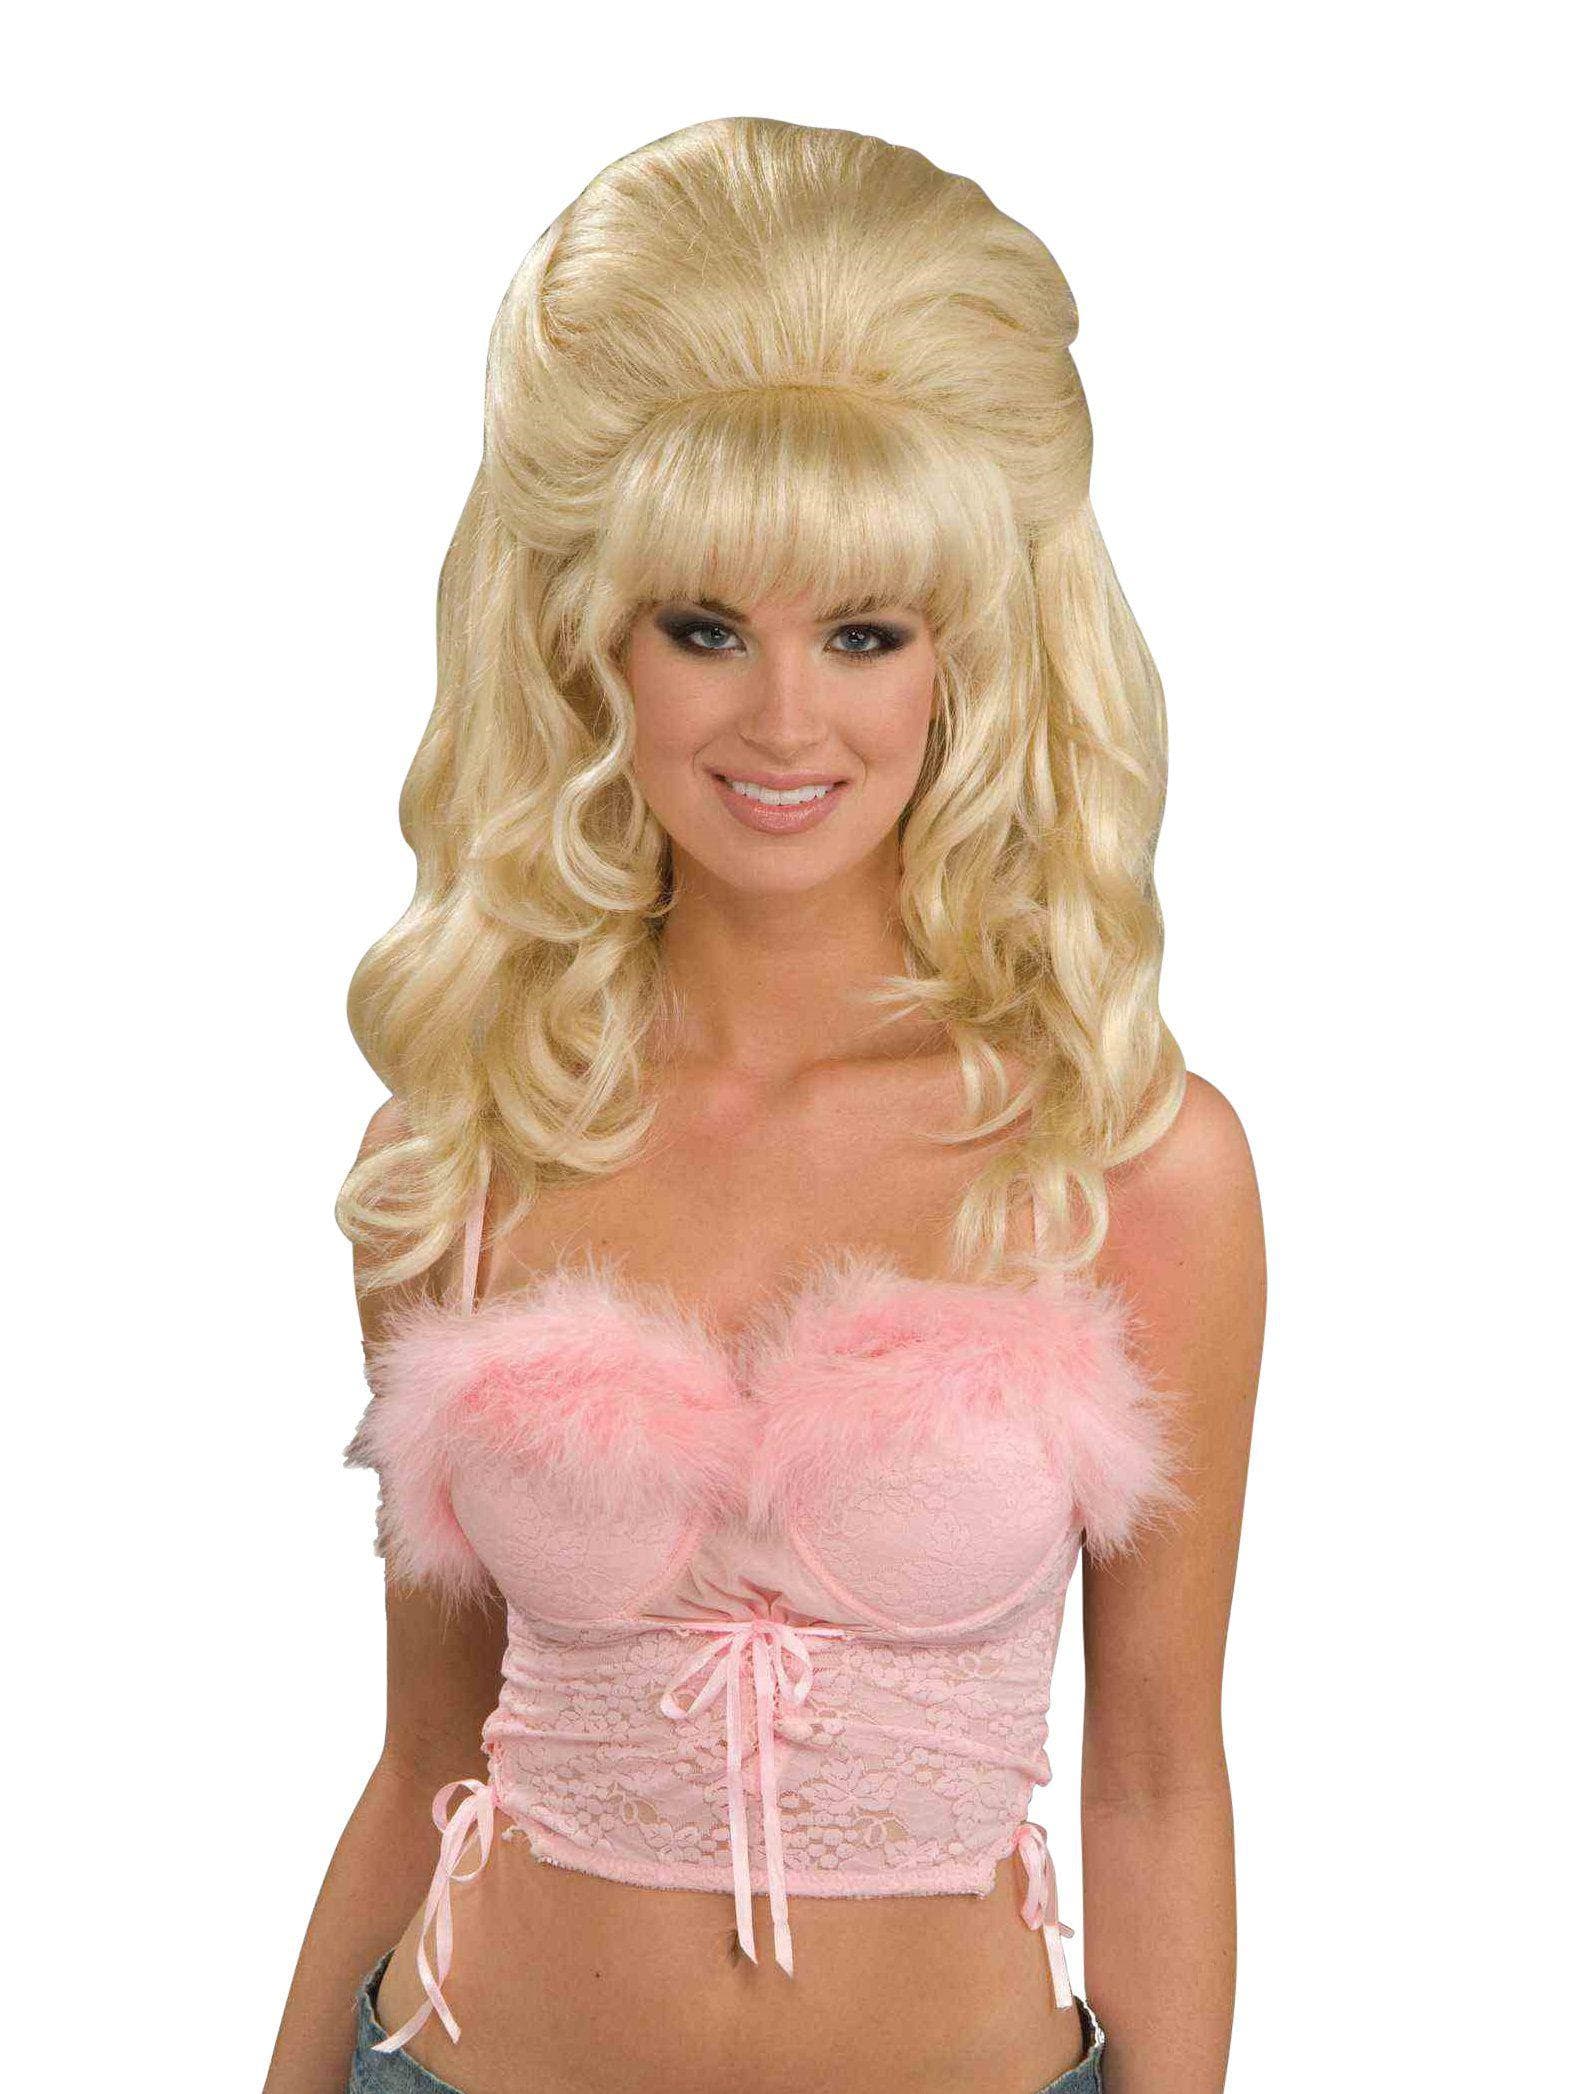 Women's Blonde Flirty Fantasy Bouffant Wig - costumes.com